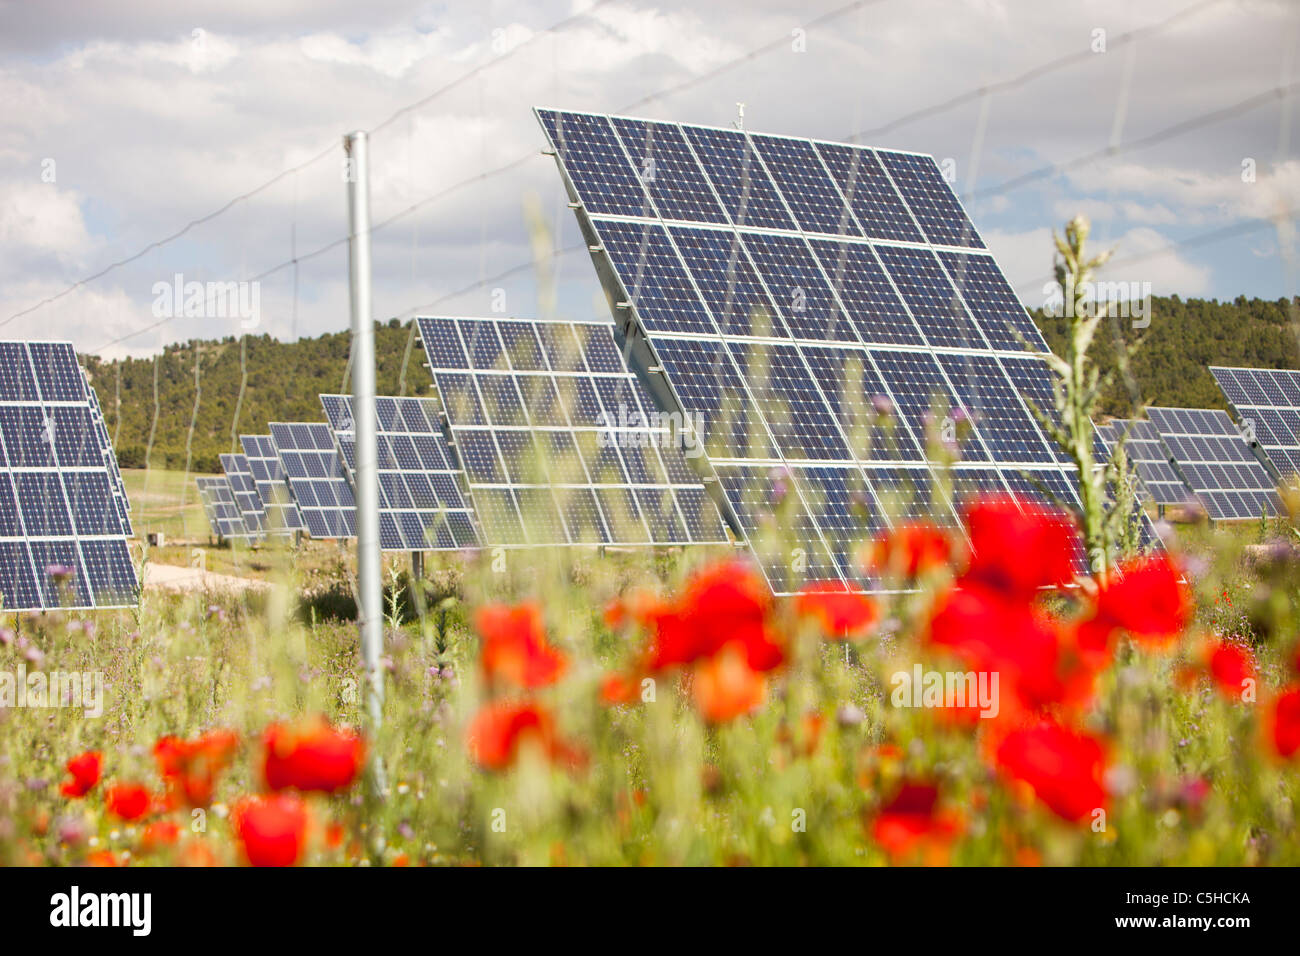 A photo voltaic solar power station near Caravaca, Murcia, Spain. Stock Photo